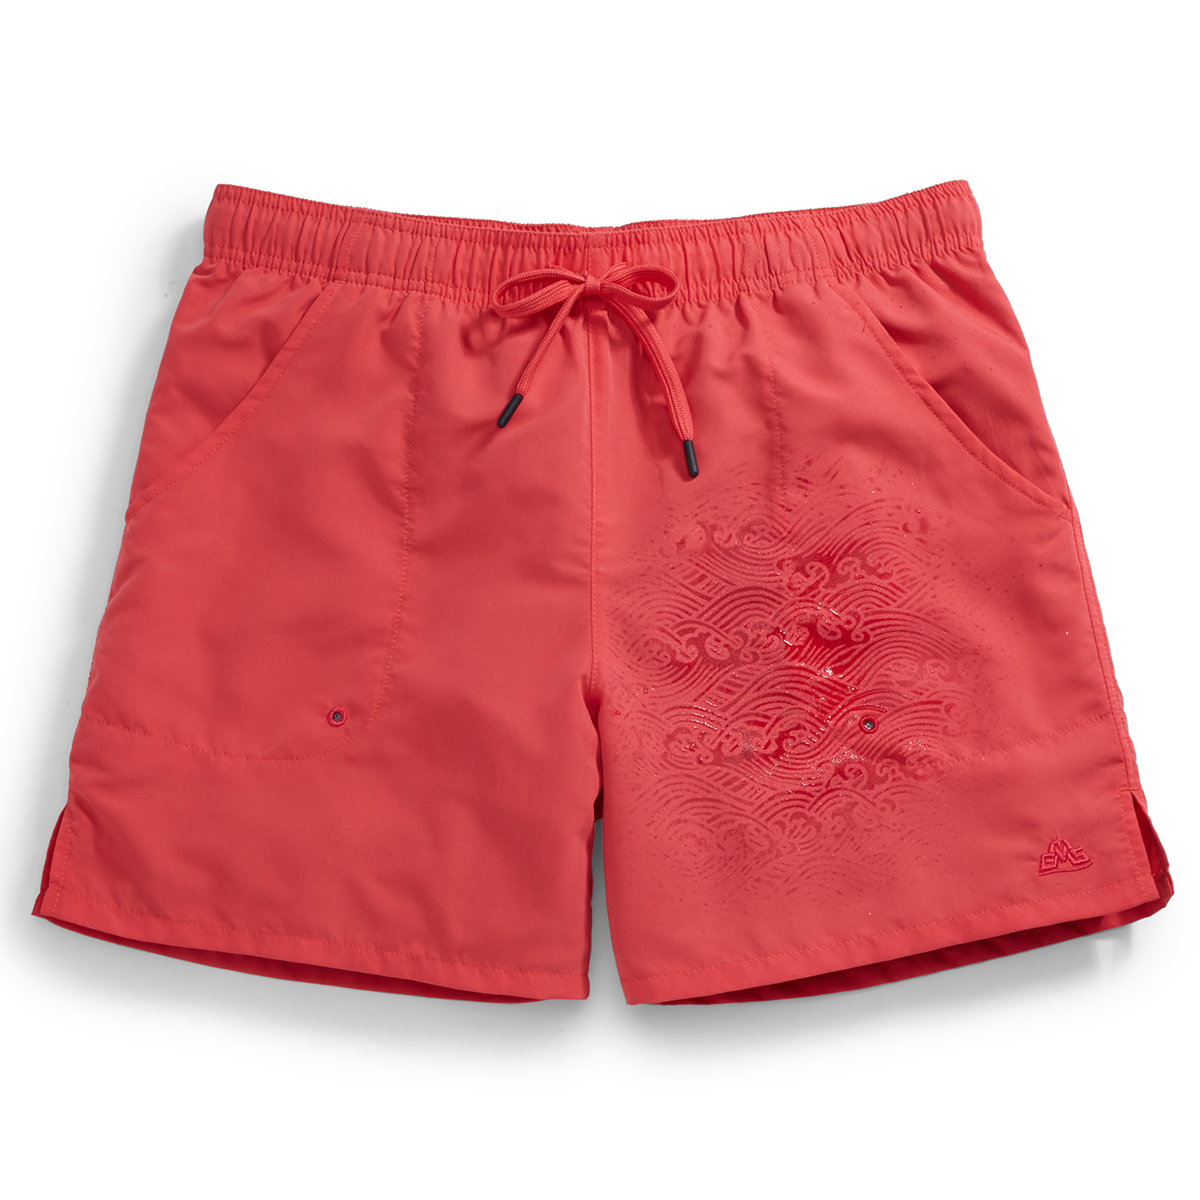 Ems Women's Fin Water Shorts - Red, XS